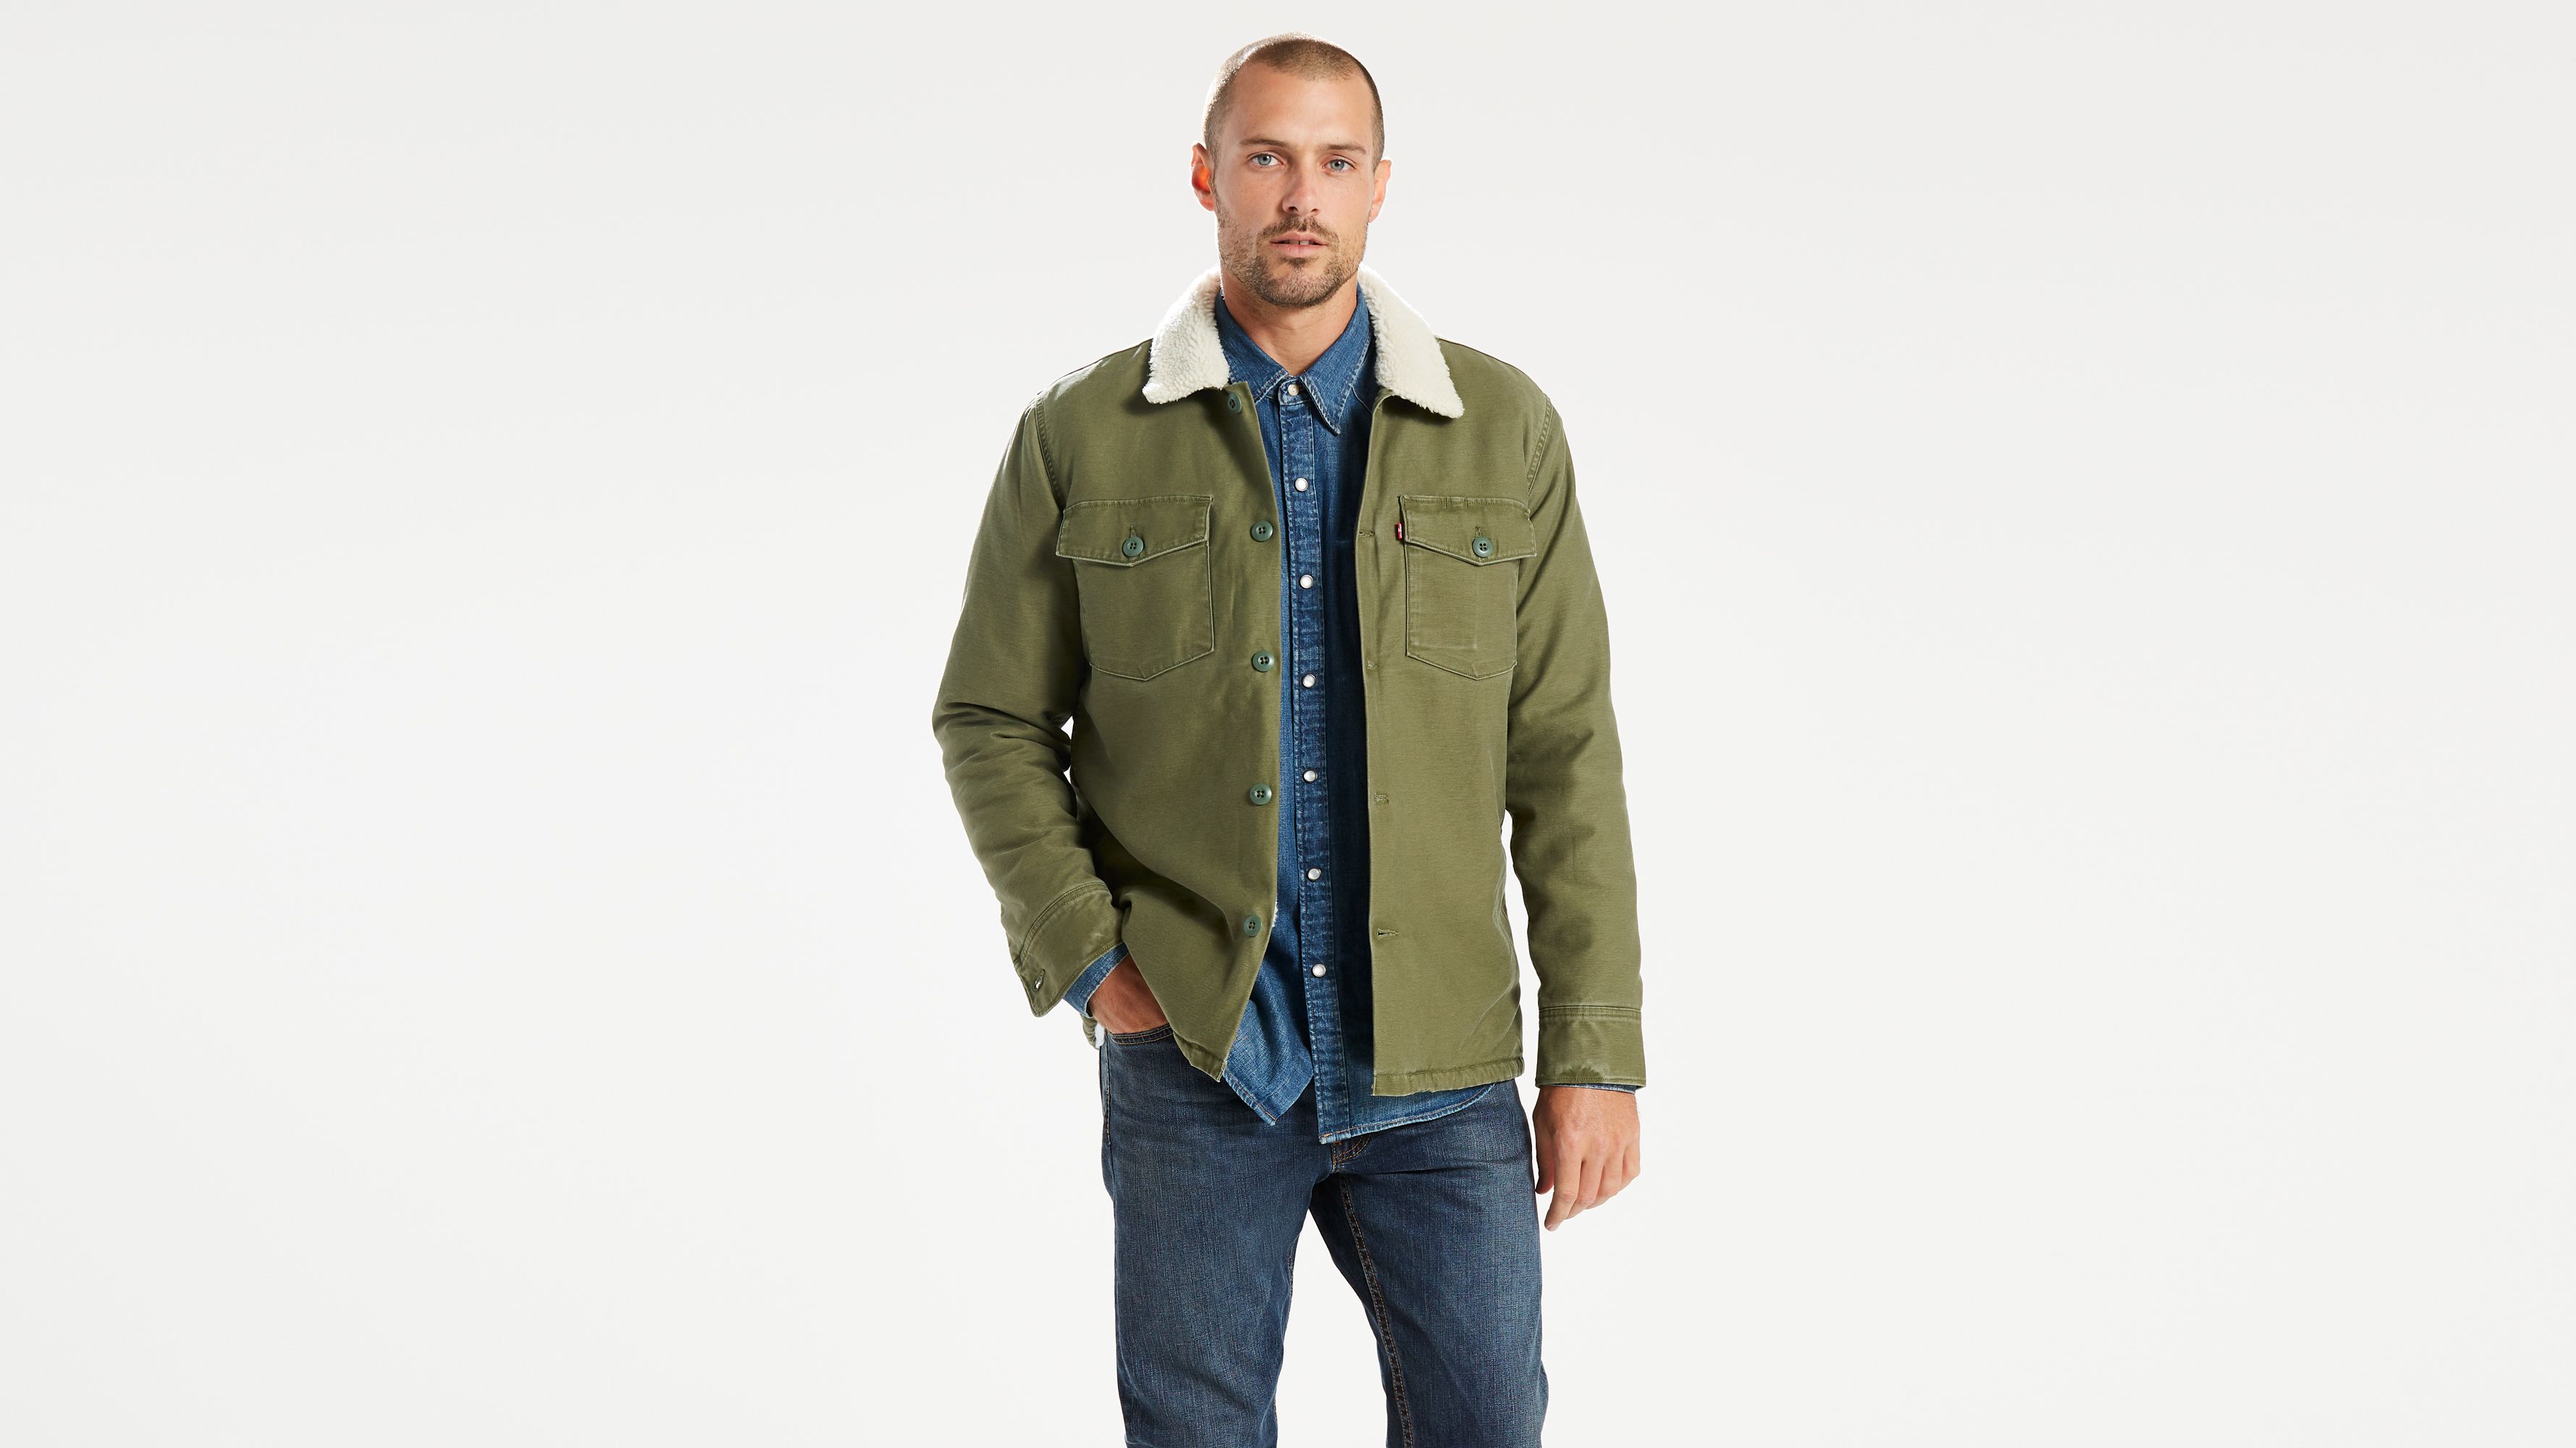 Men's Coats & Jackets | Denim Jackets For Men | Levi's Uk